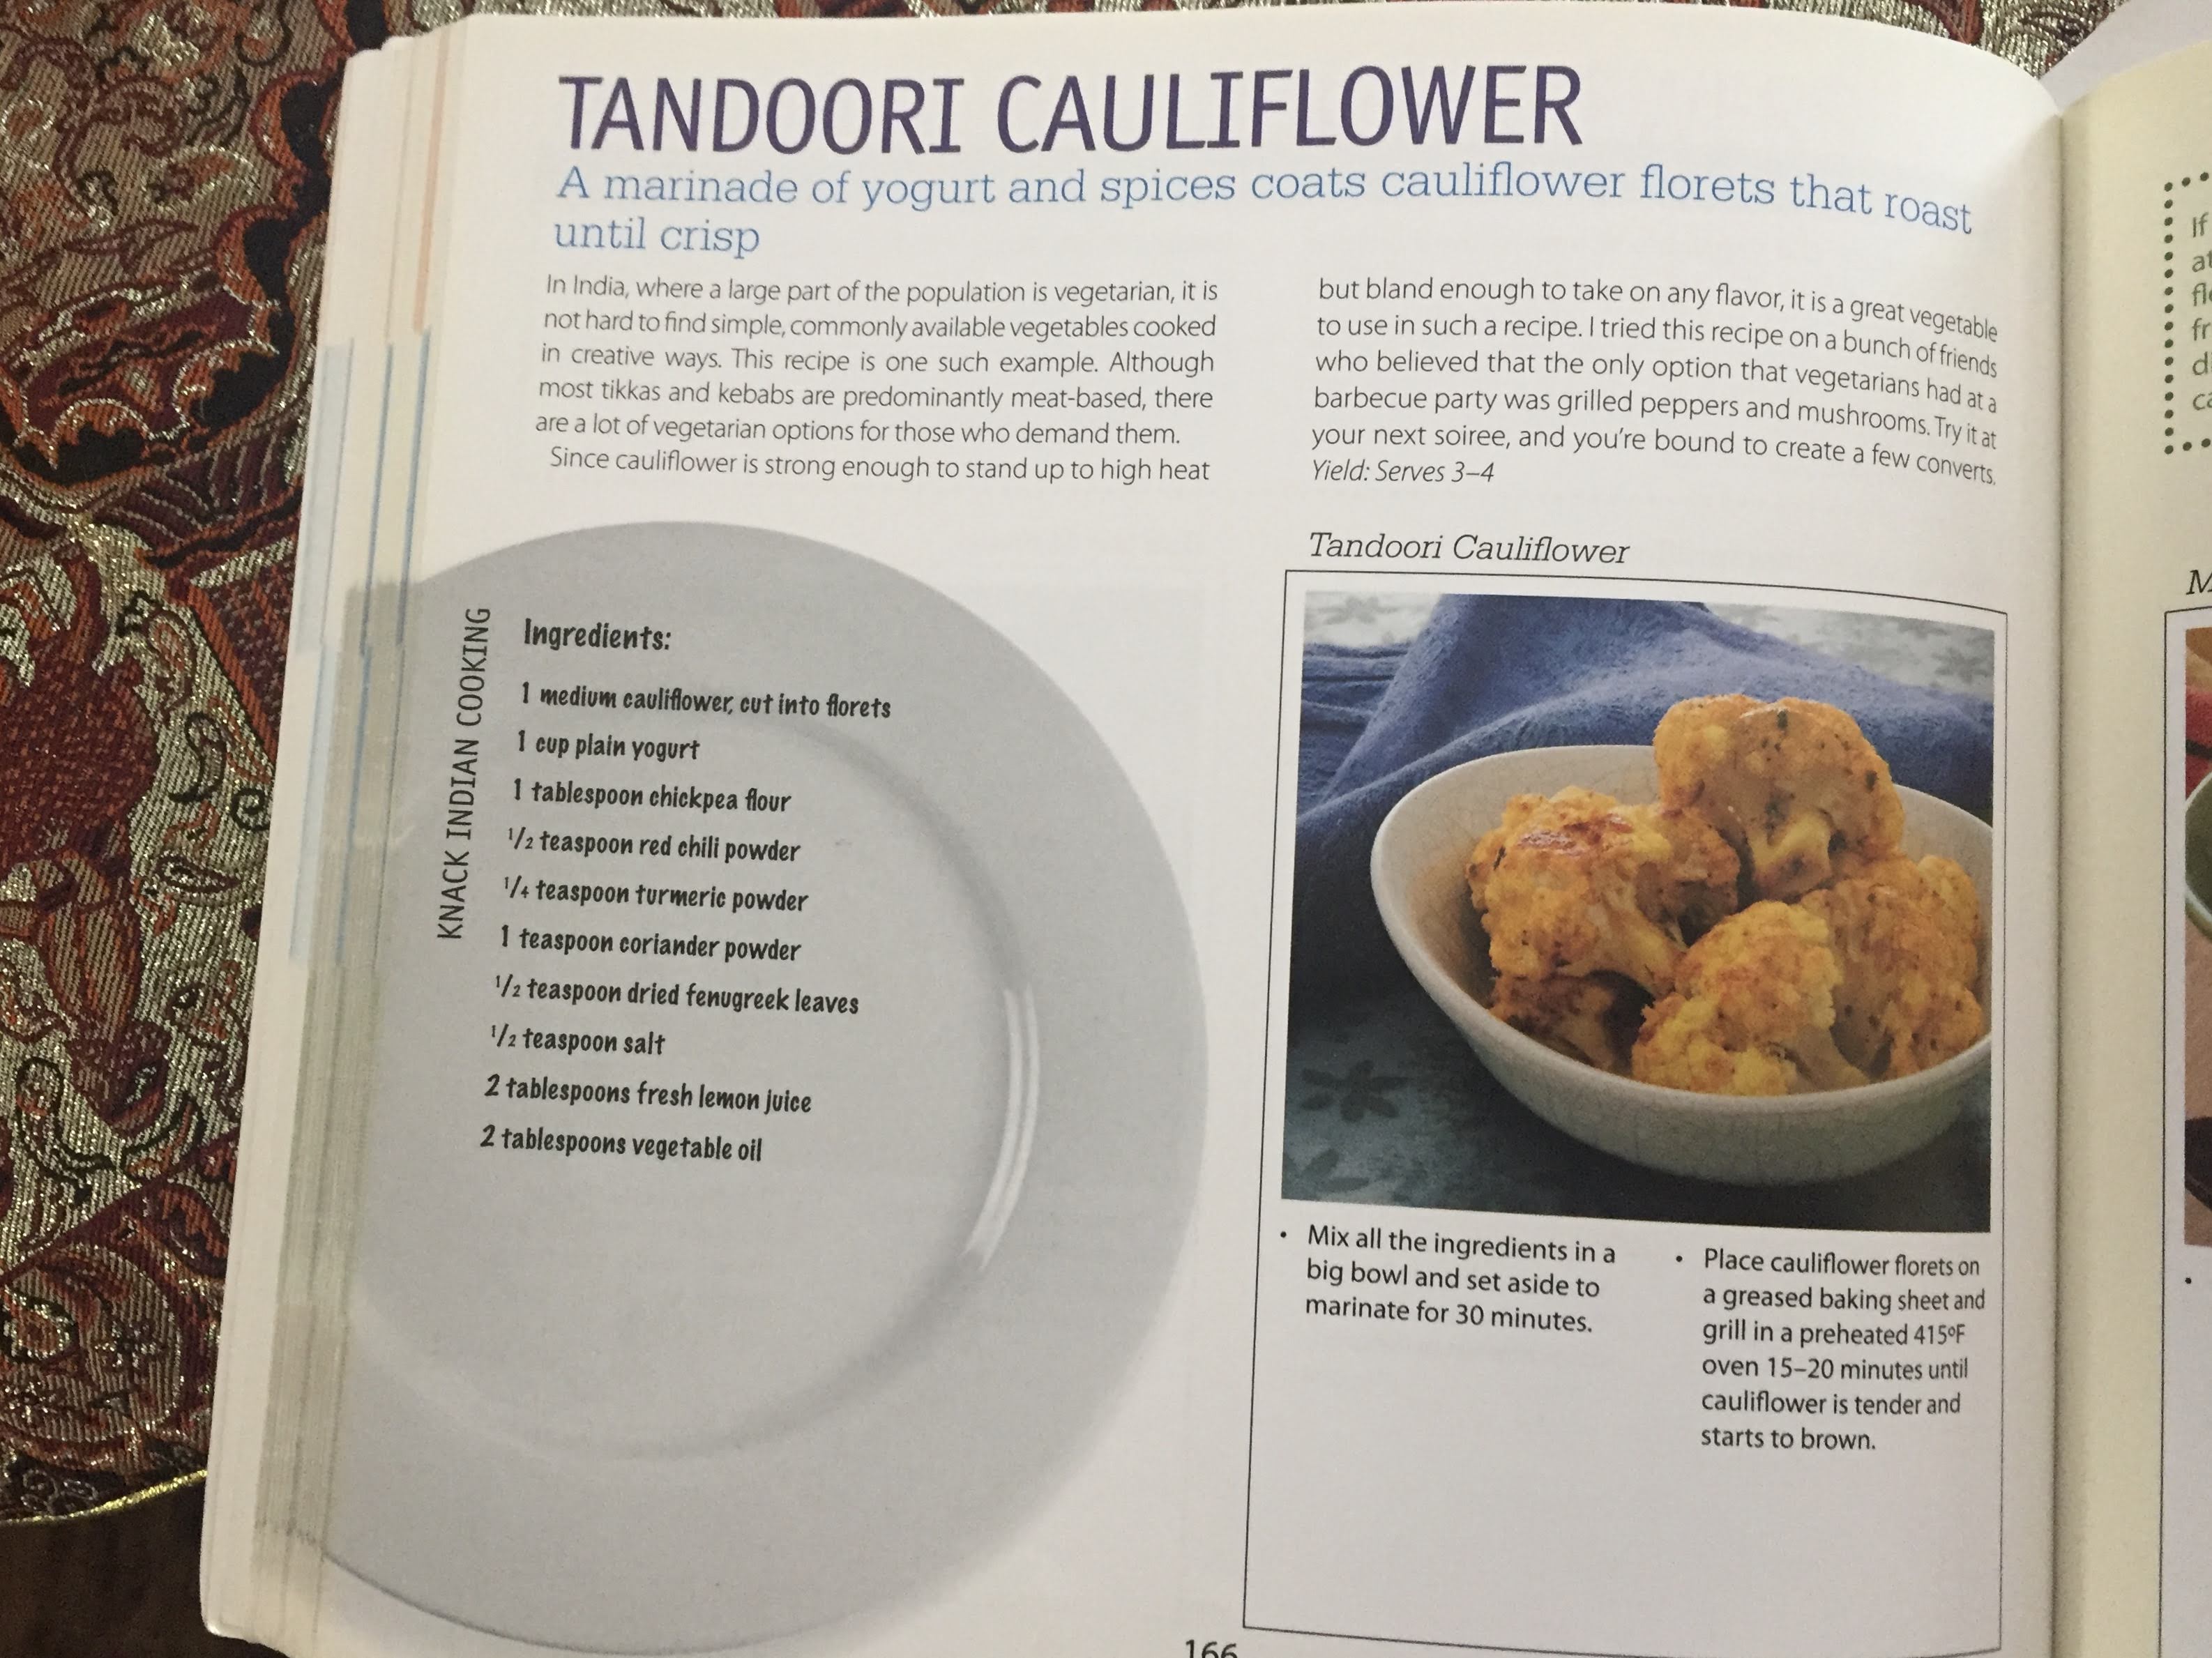 Fried Califlower